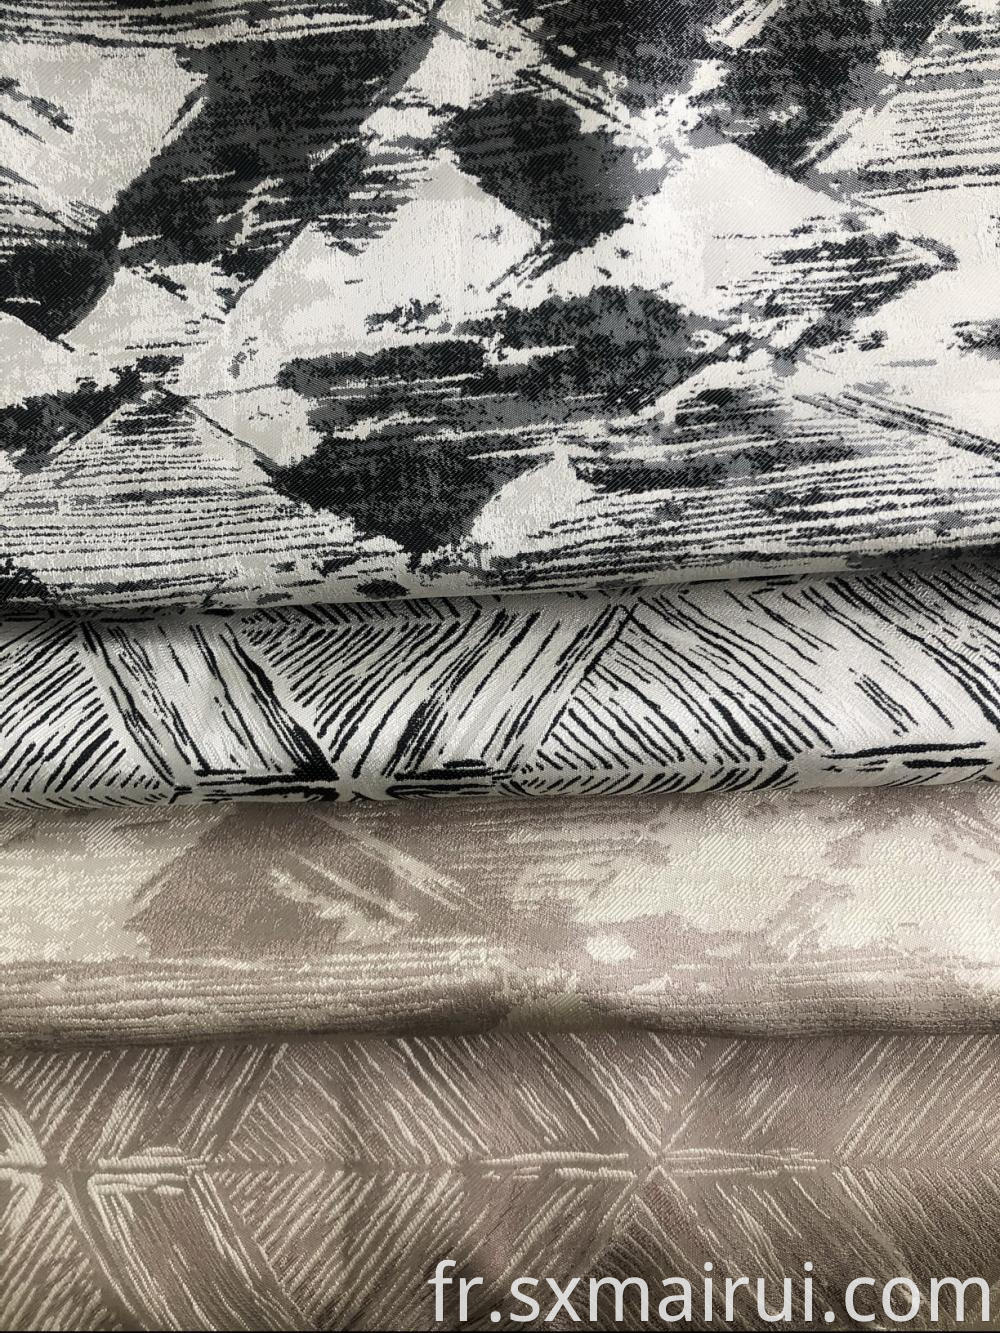 100% Polyester Curtain Jacquard Fabric